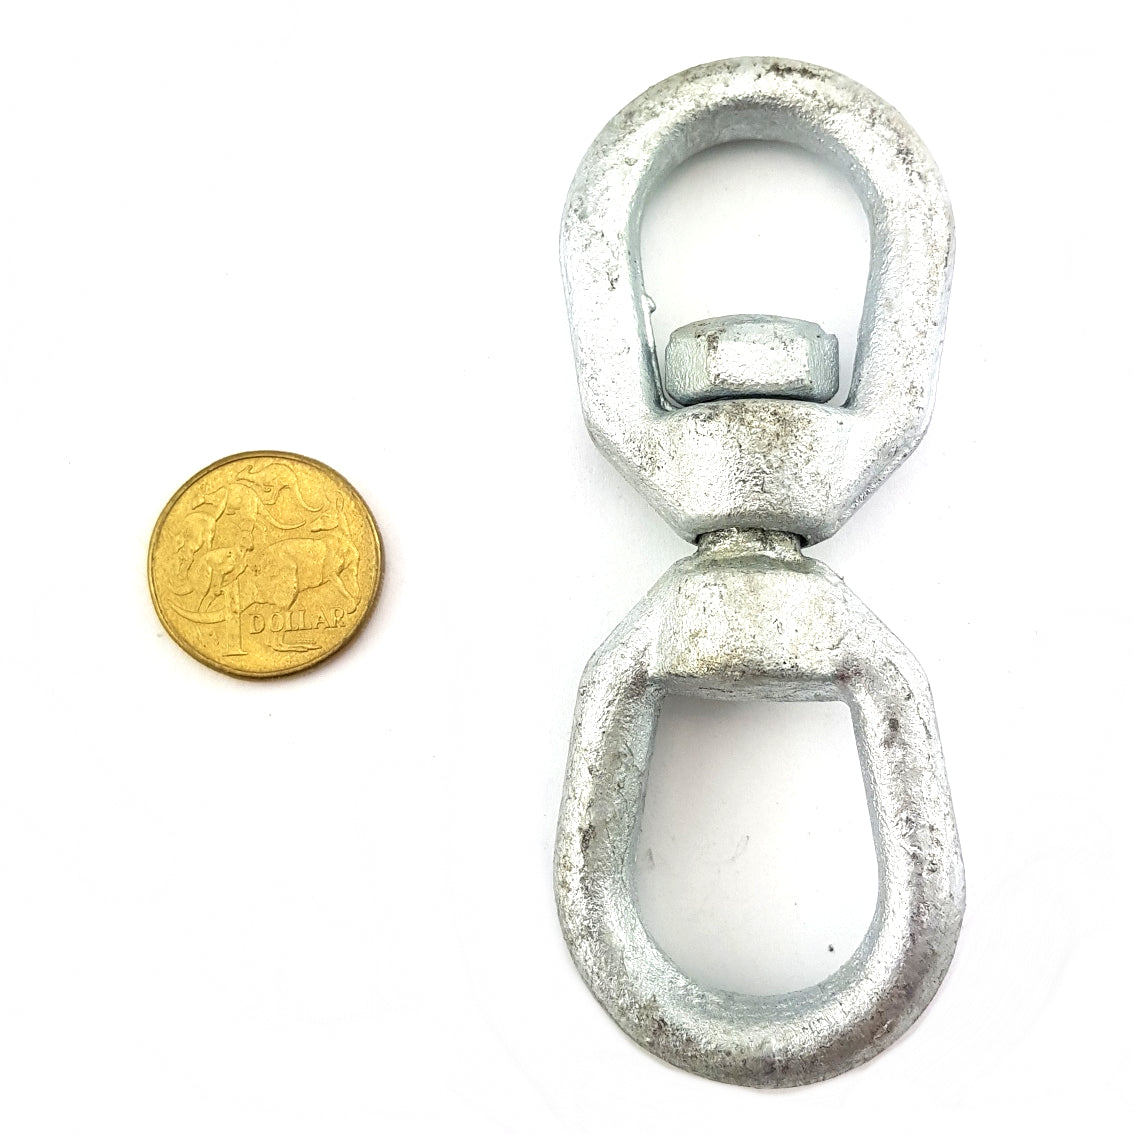 Galvanised steel chain swivel, size 8mm. Melbourne Australia